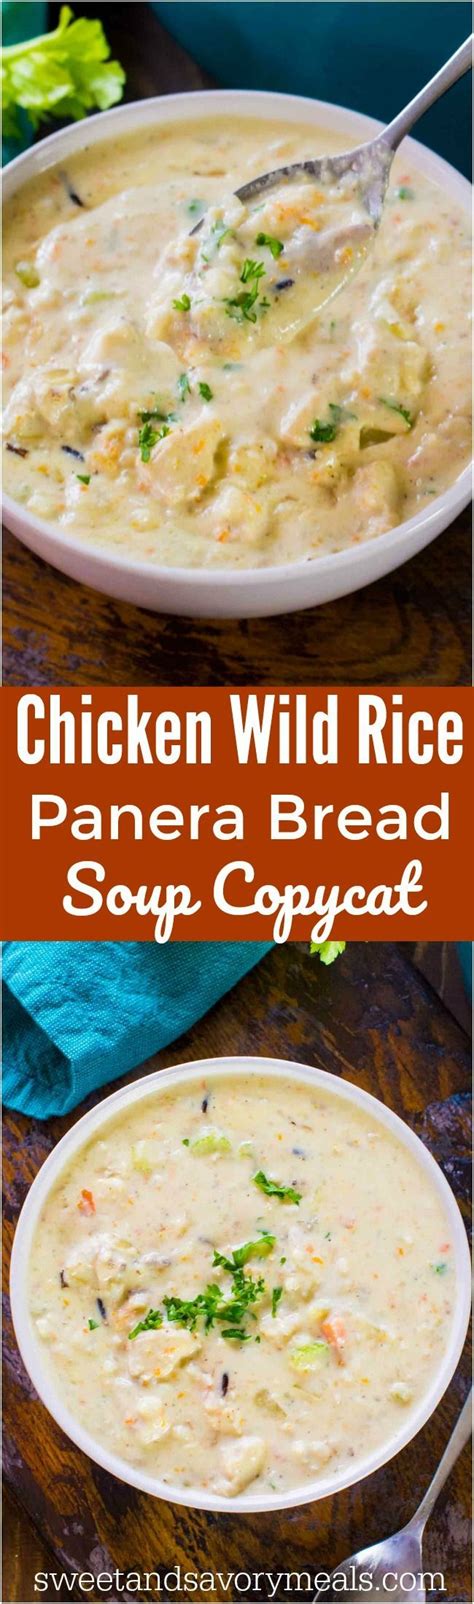 Chicken & wild rice soup video. Panera Bread Chicken Wild Rice Soup | Recipe | Chicken ...